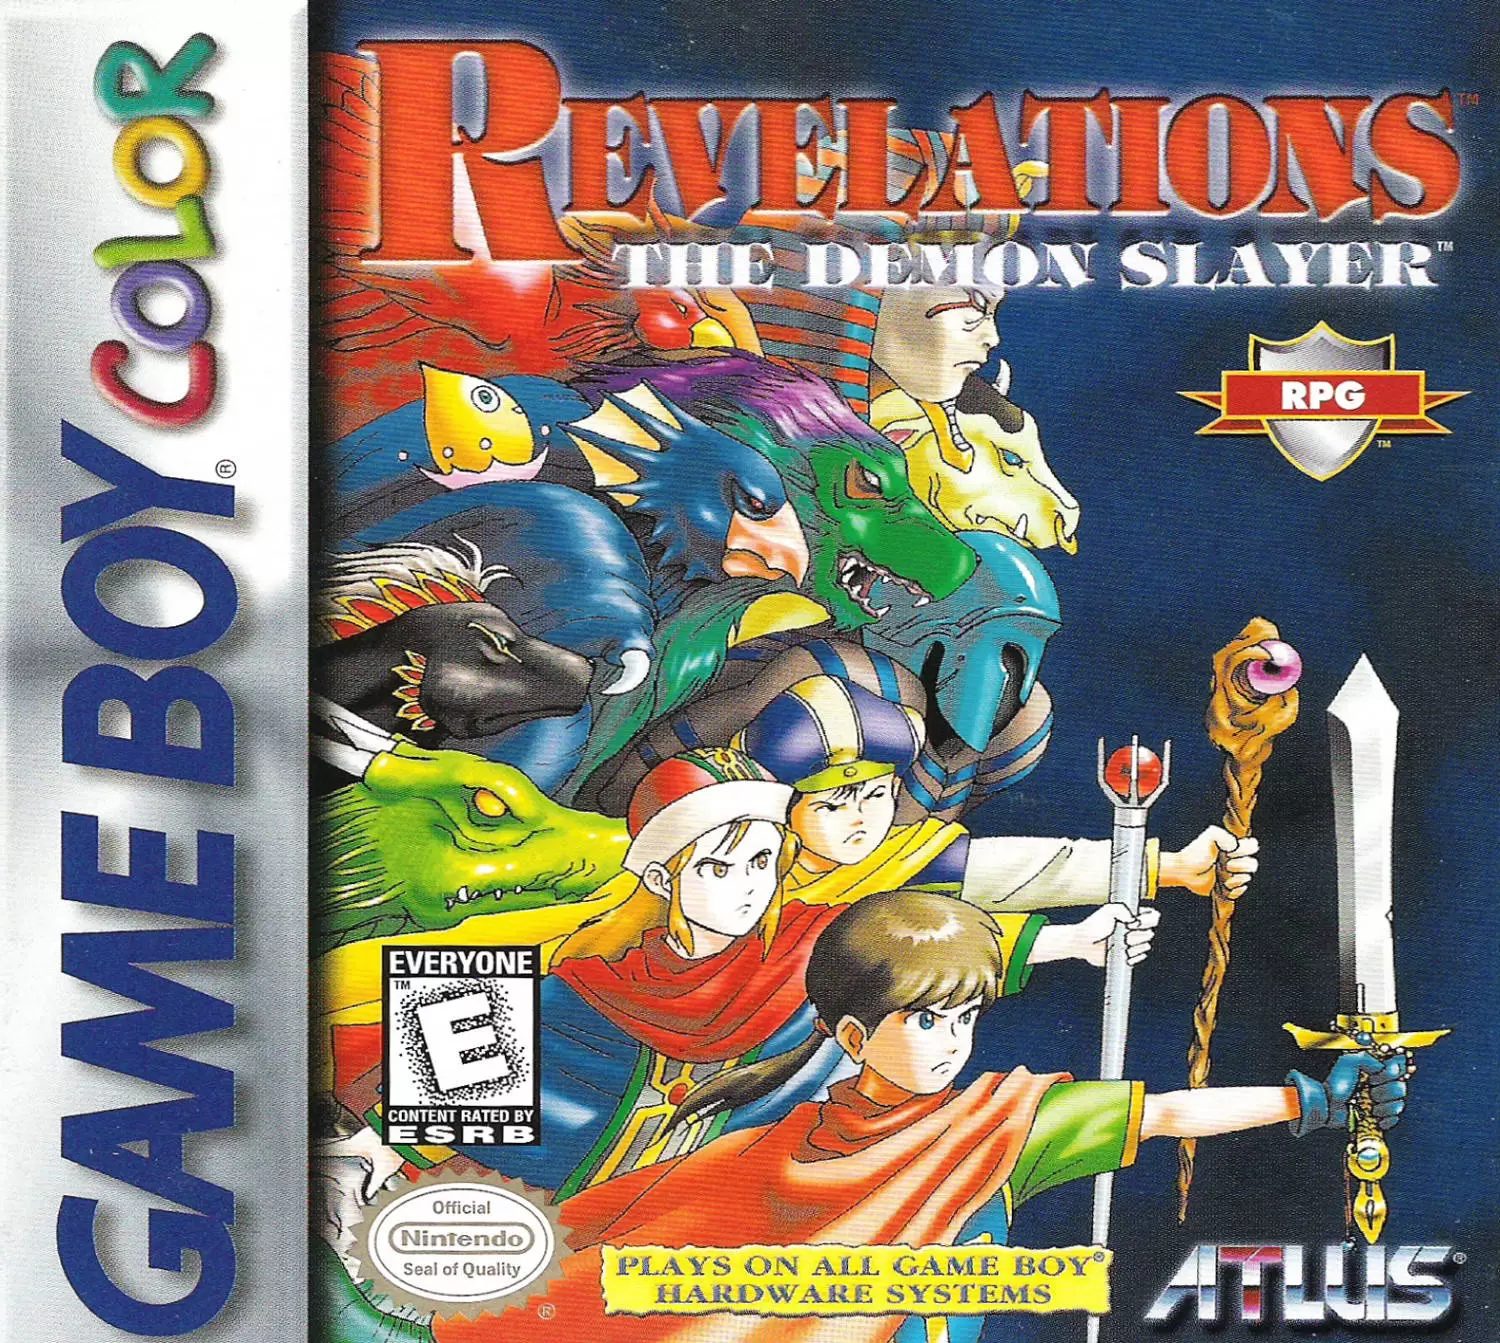 Game Boy Color Games - Revelations: The Demon Slayer